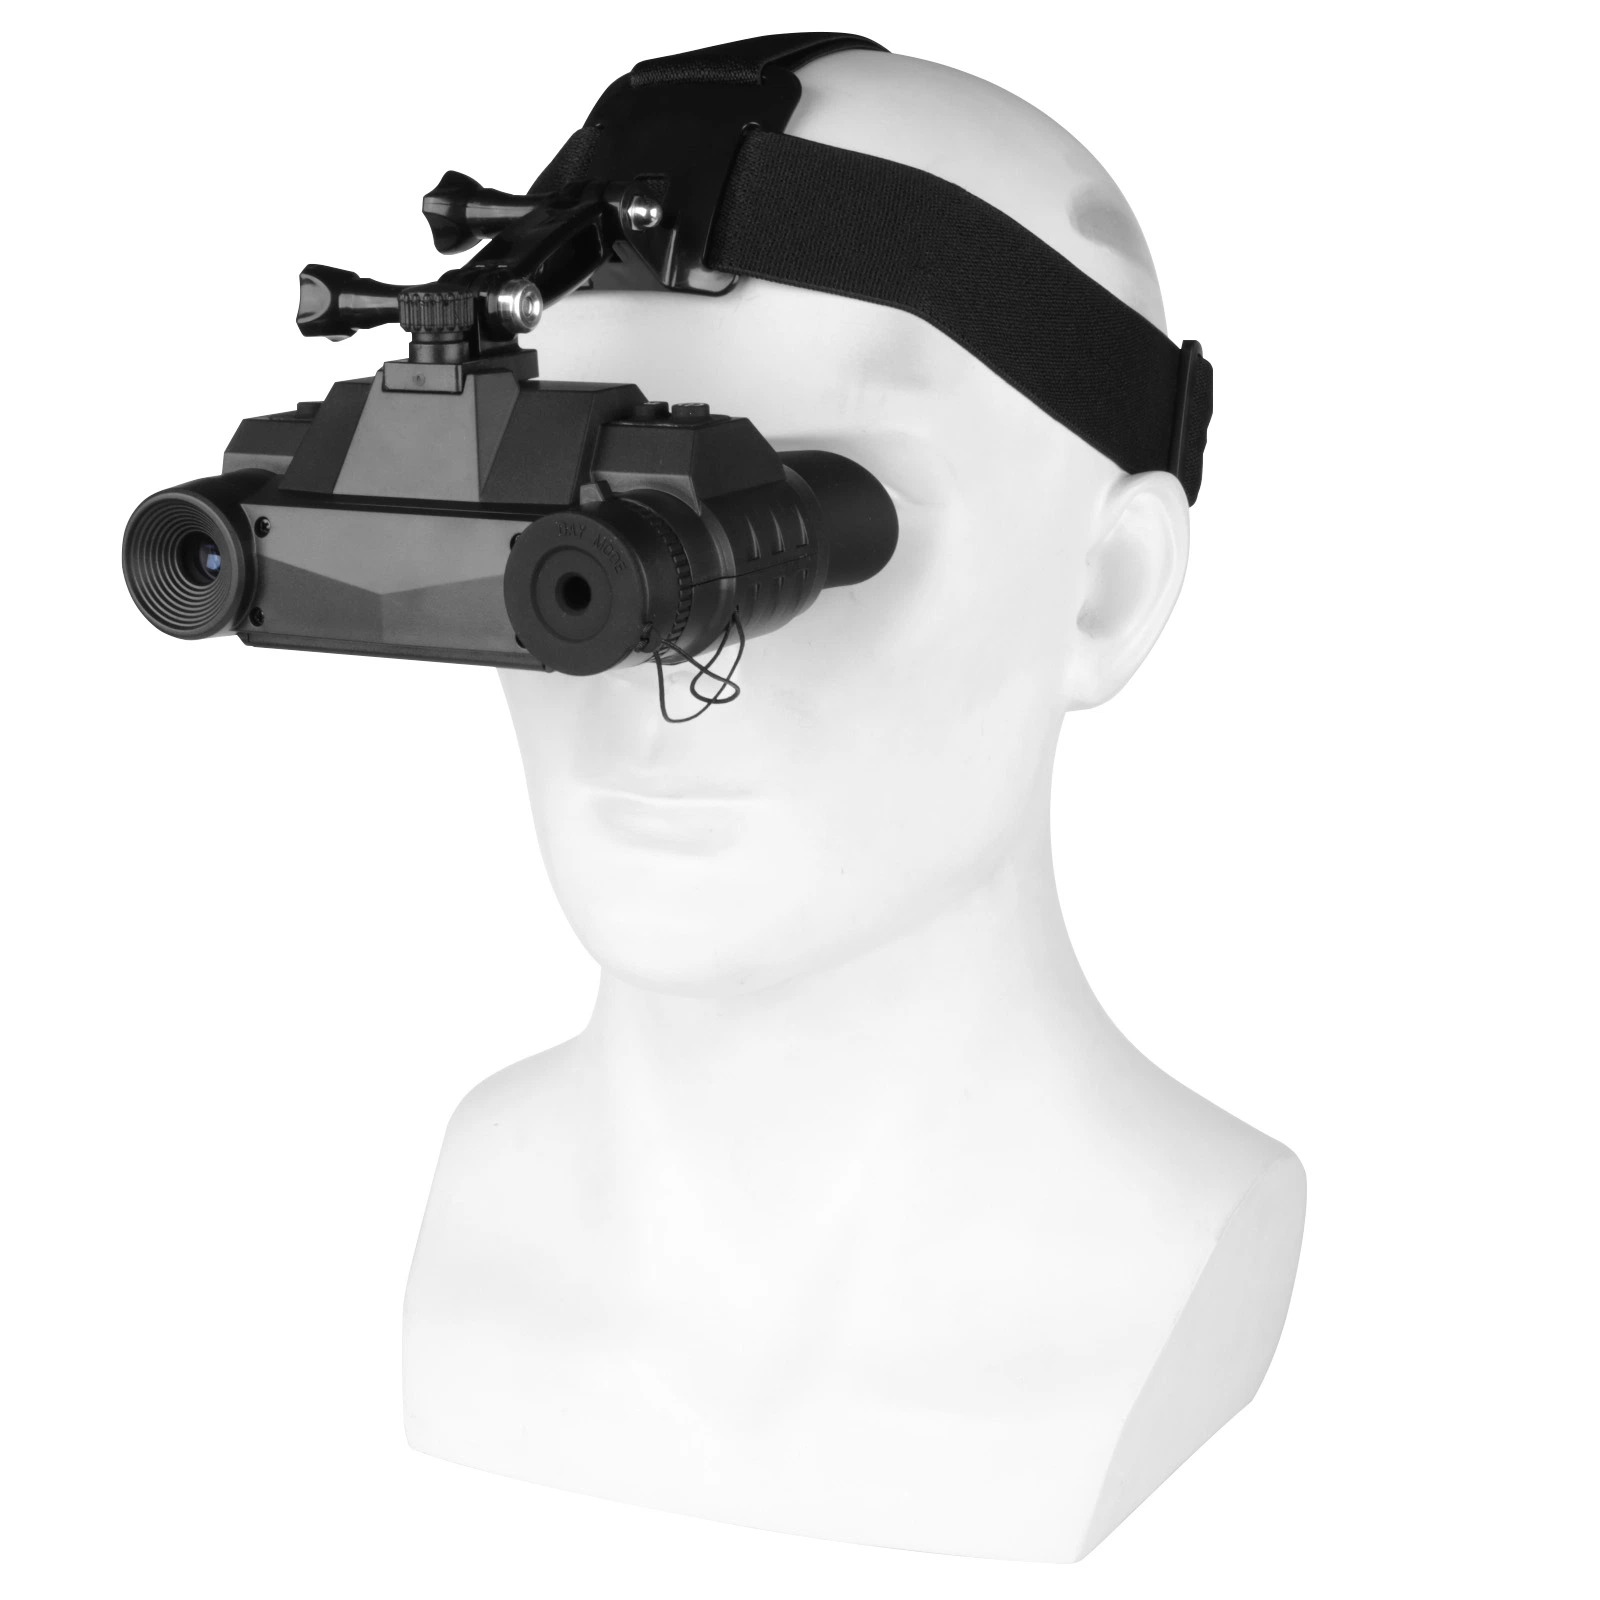 Spina Optics Nvg-G1 Helmet Night Vision Binoculars Nvg IR 940nm Head Mounted Goggles Night Vision Hunting Surveillance